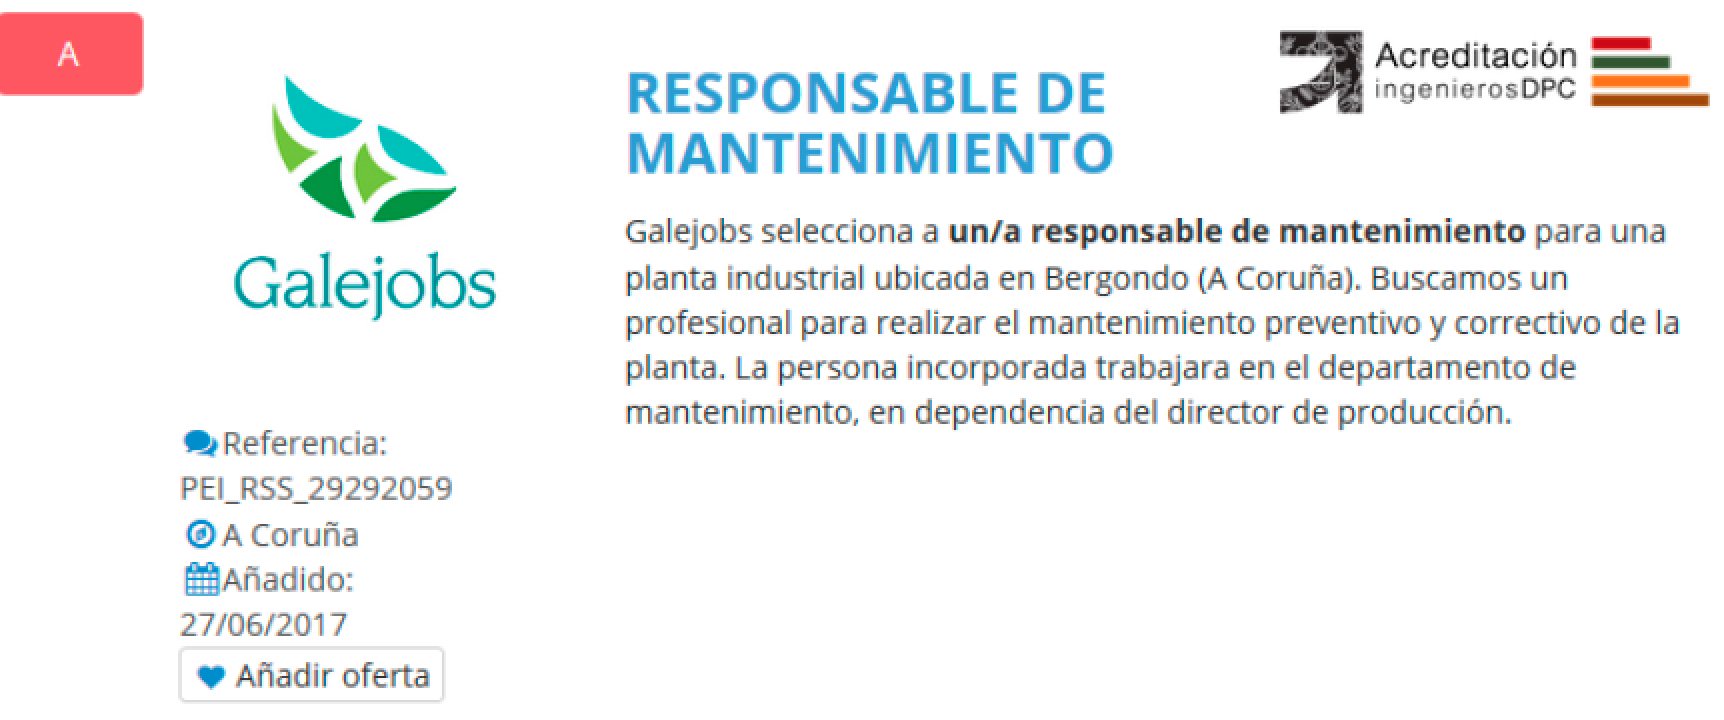 #empleo @proempleoing  Responsable de Mantenimiento - A Coruña https://t.co/70KoGtsSaW https://t.co/sHjwHxUUm9